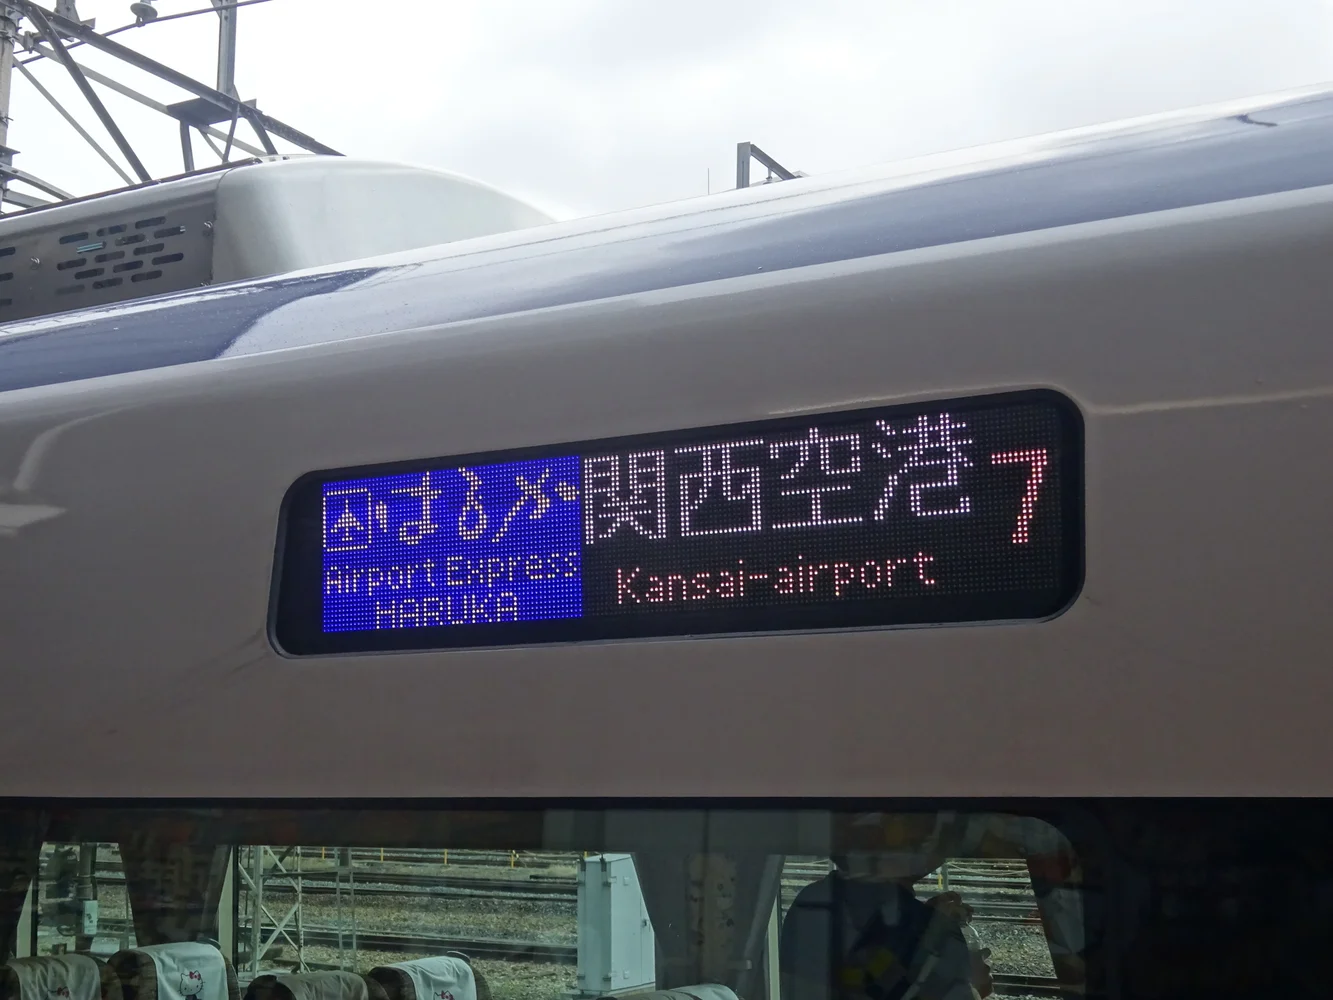 Kansai Airport–Kobe Haruka Limited Express One-Way Tickets [For Tourists]